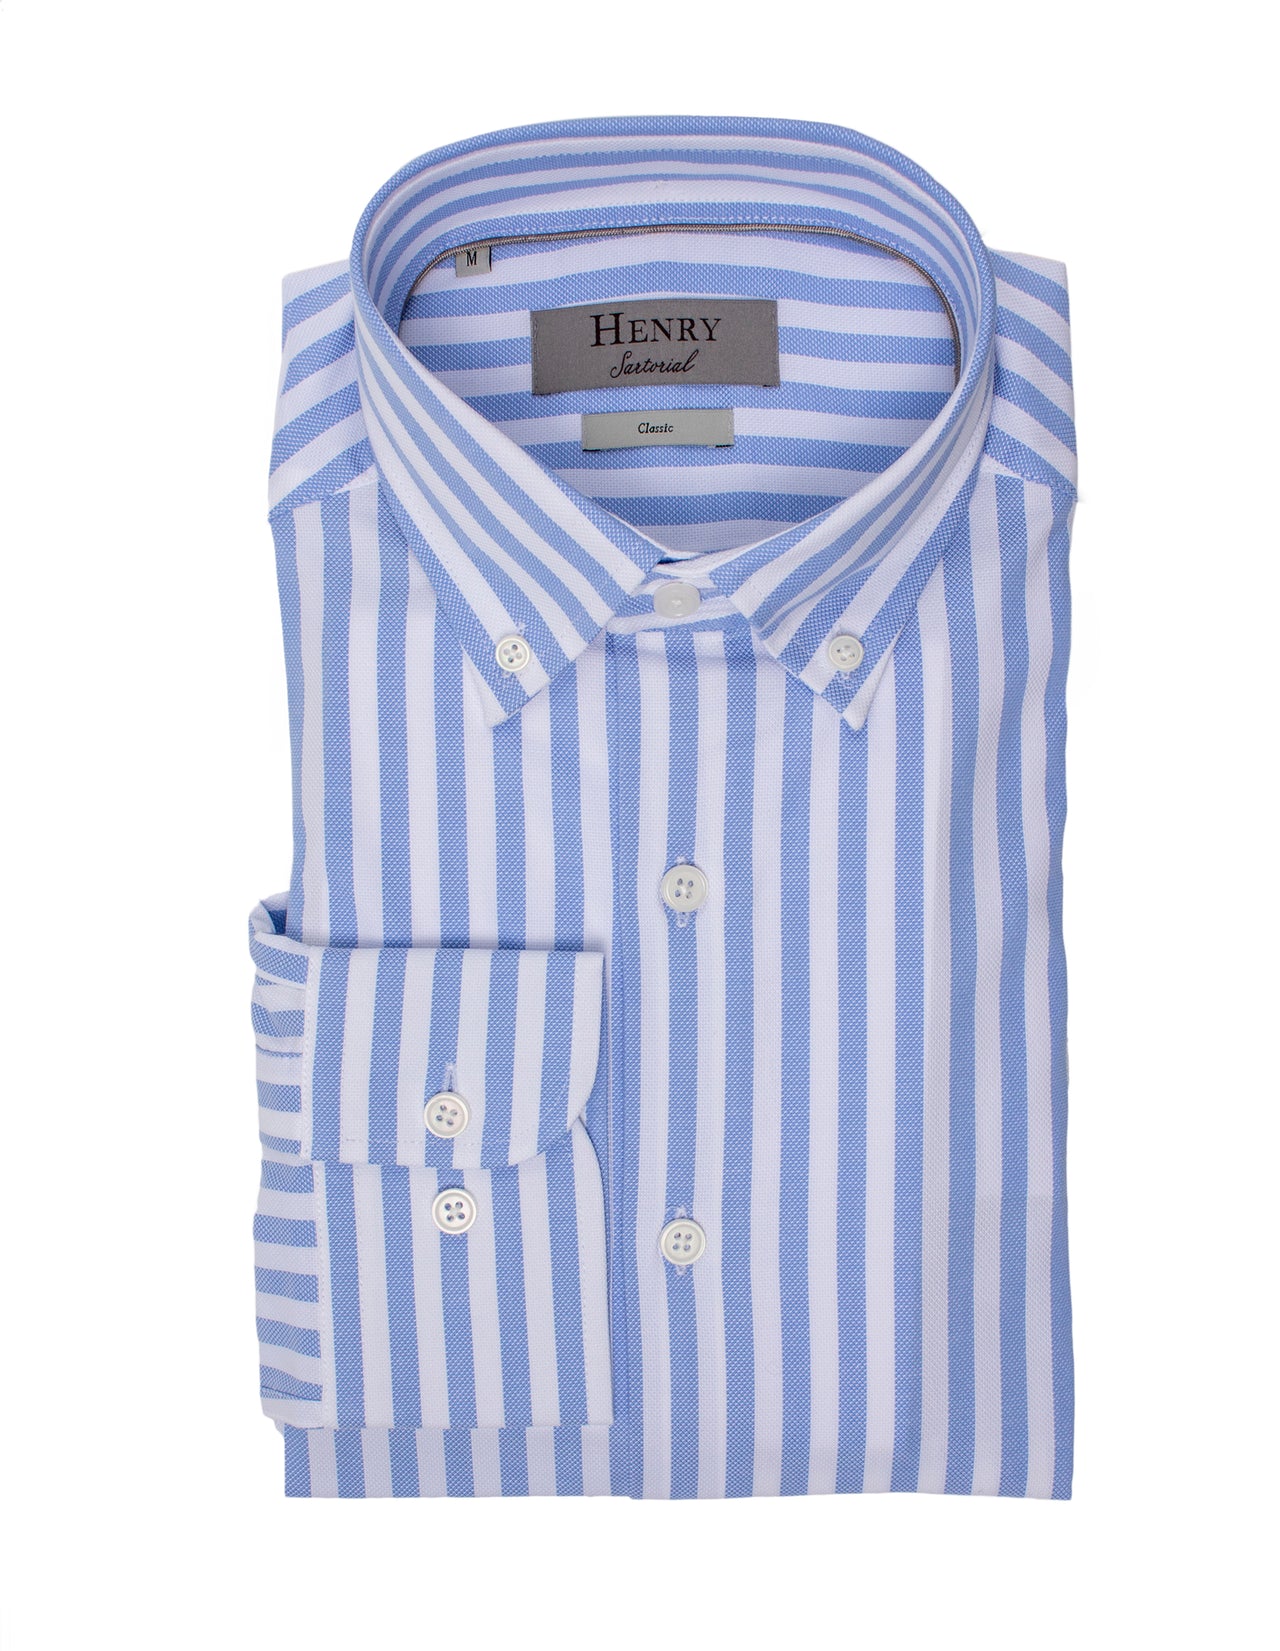 HENRY SARTORIAL Bengal Stripe Shirt BLUE/WHITE